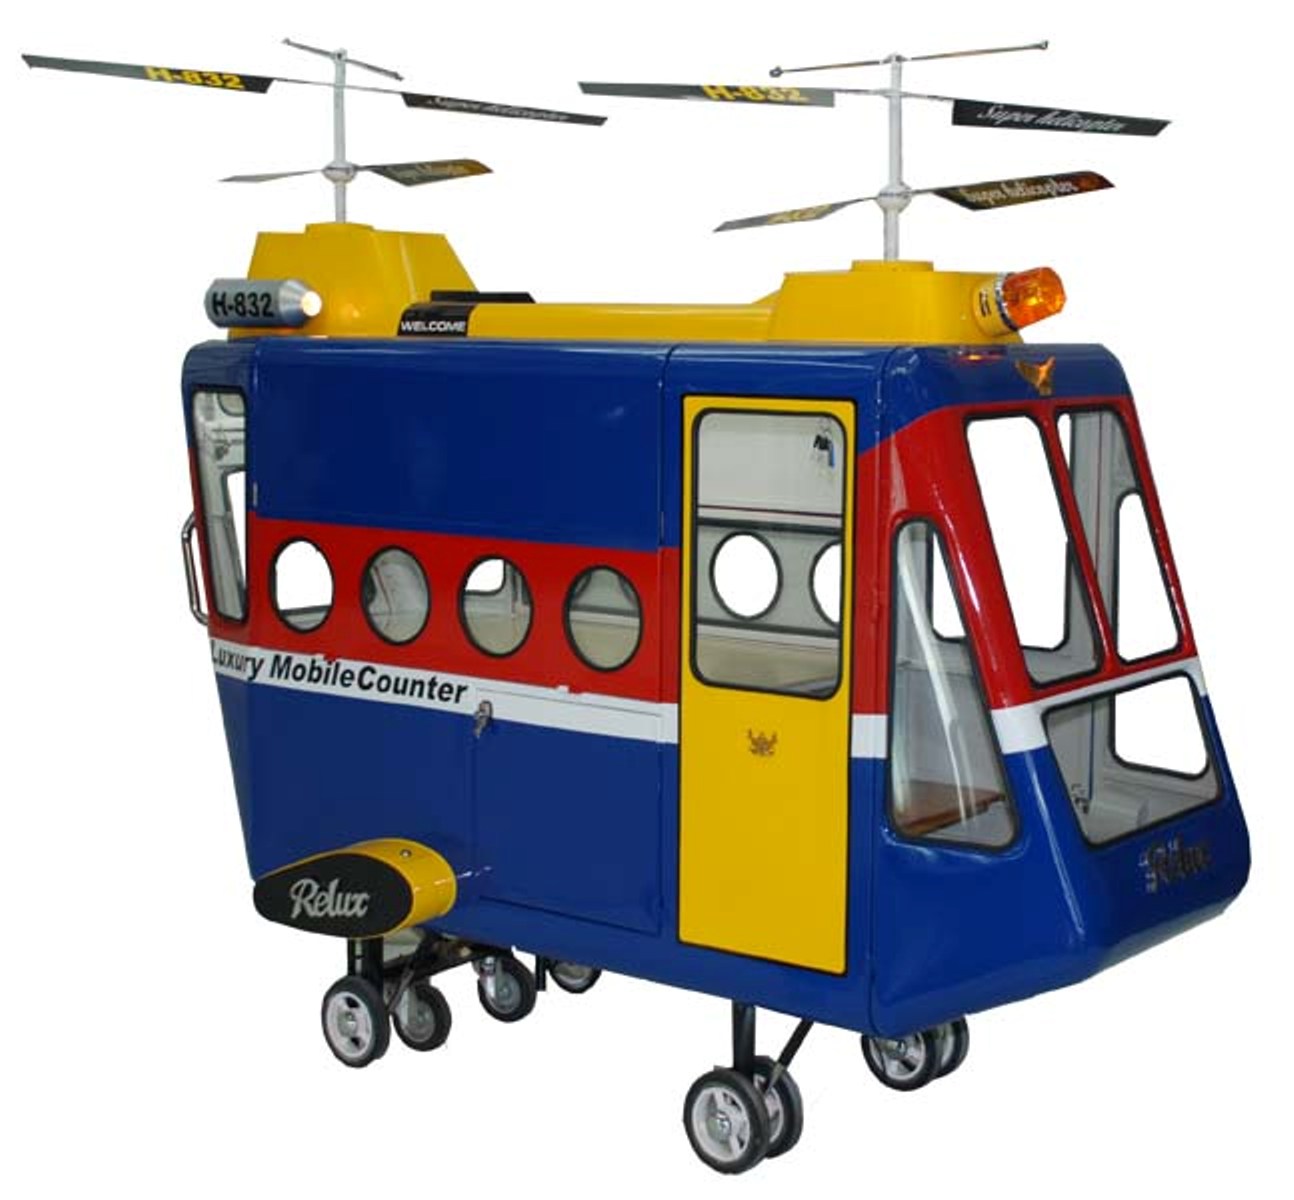 Relux รถเข็นเหล็กคีย์ออส สำหรับโชว์สินค้า/จำหน่ายสินค้า/เป็นเฟอร์นิเจอร์ รุ่น เฮลิคอปเตอร์ Super Helicopter